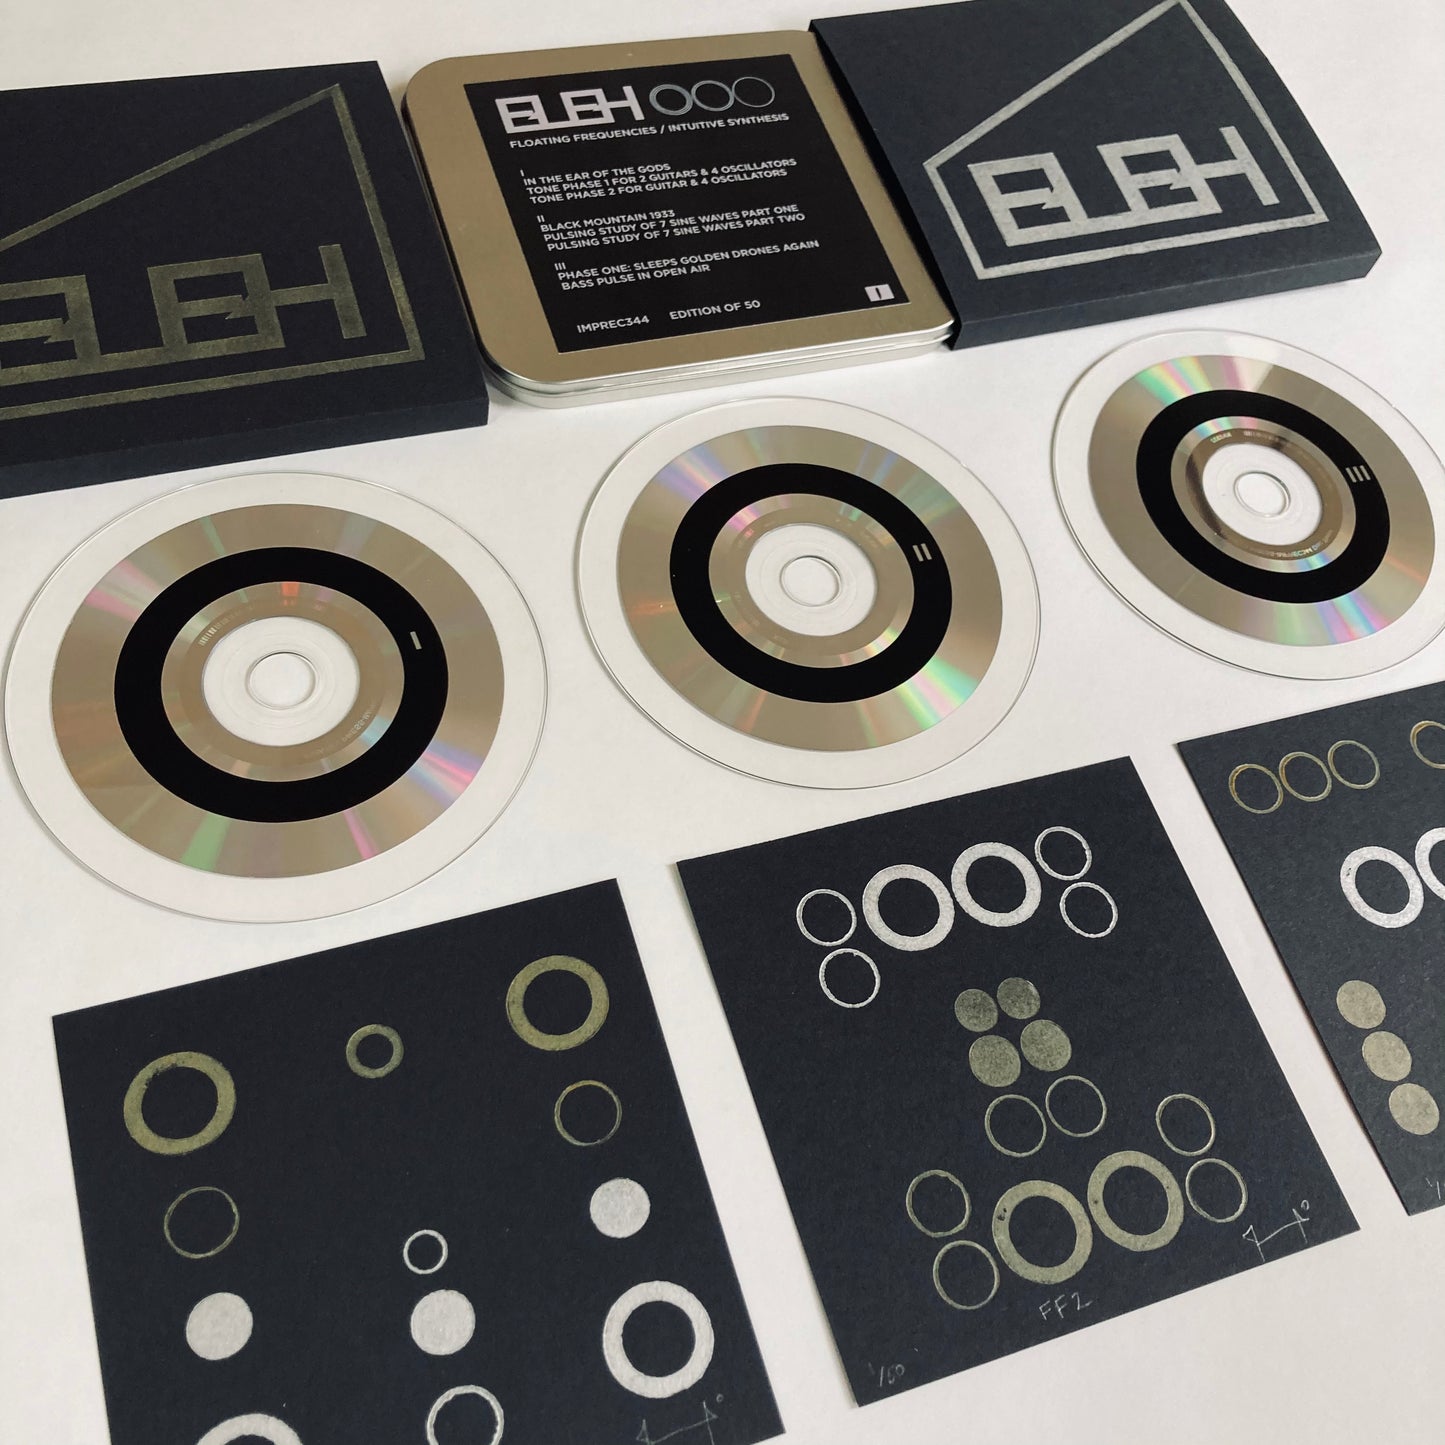 ELEH - Floating Frequencies 3 CD & Letterpress Print Set